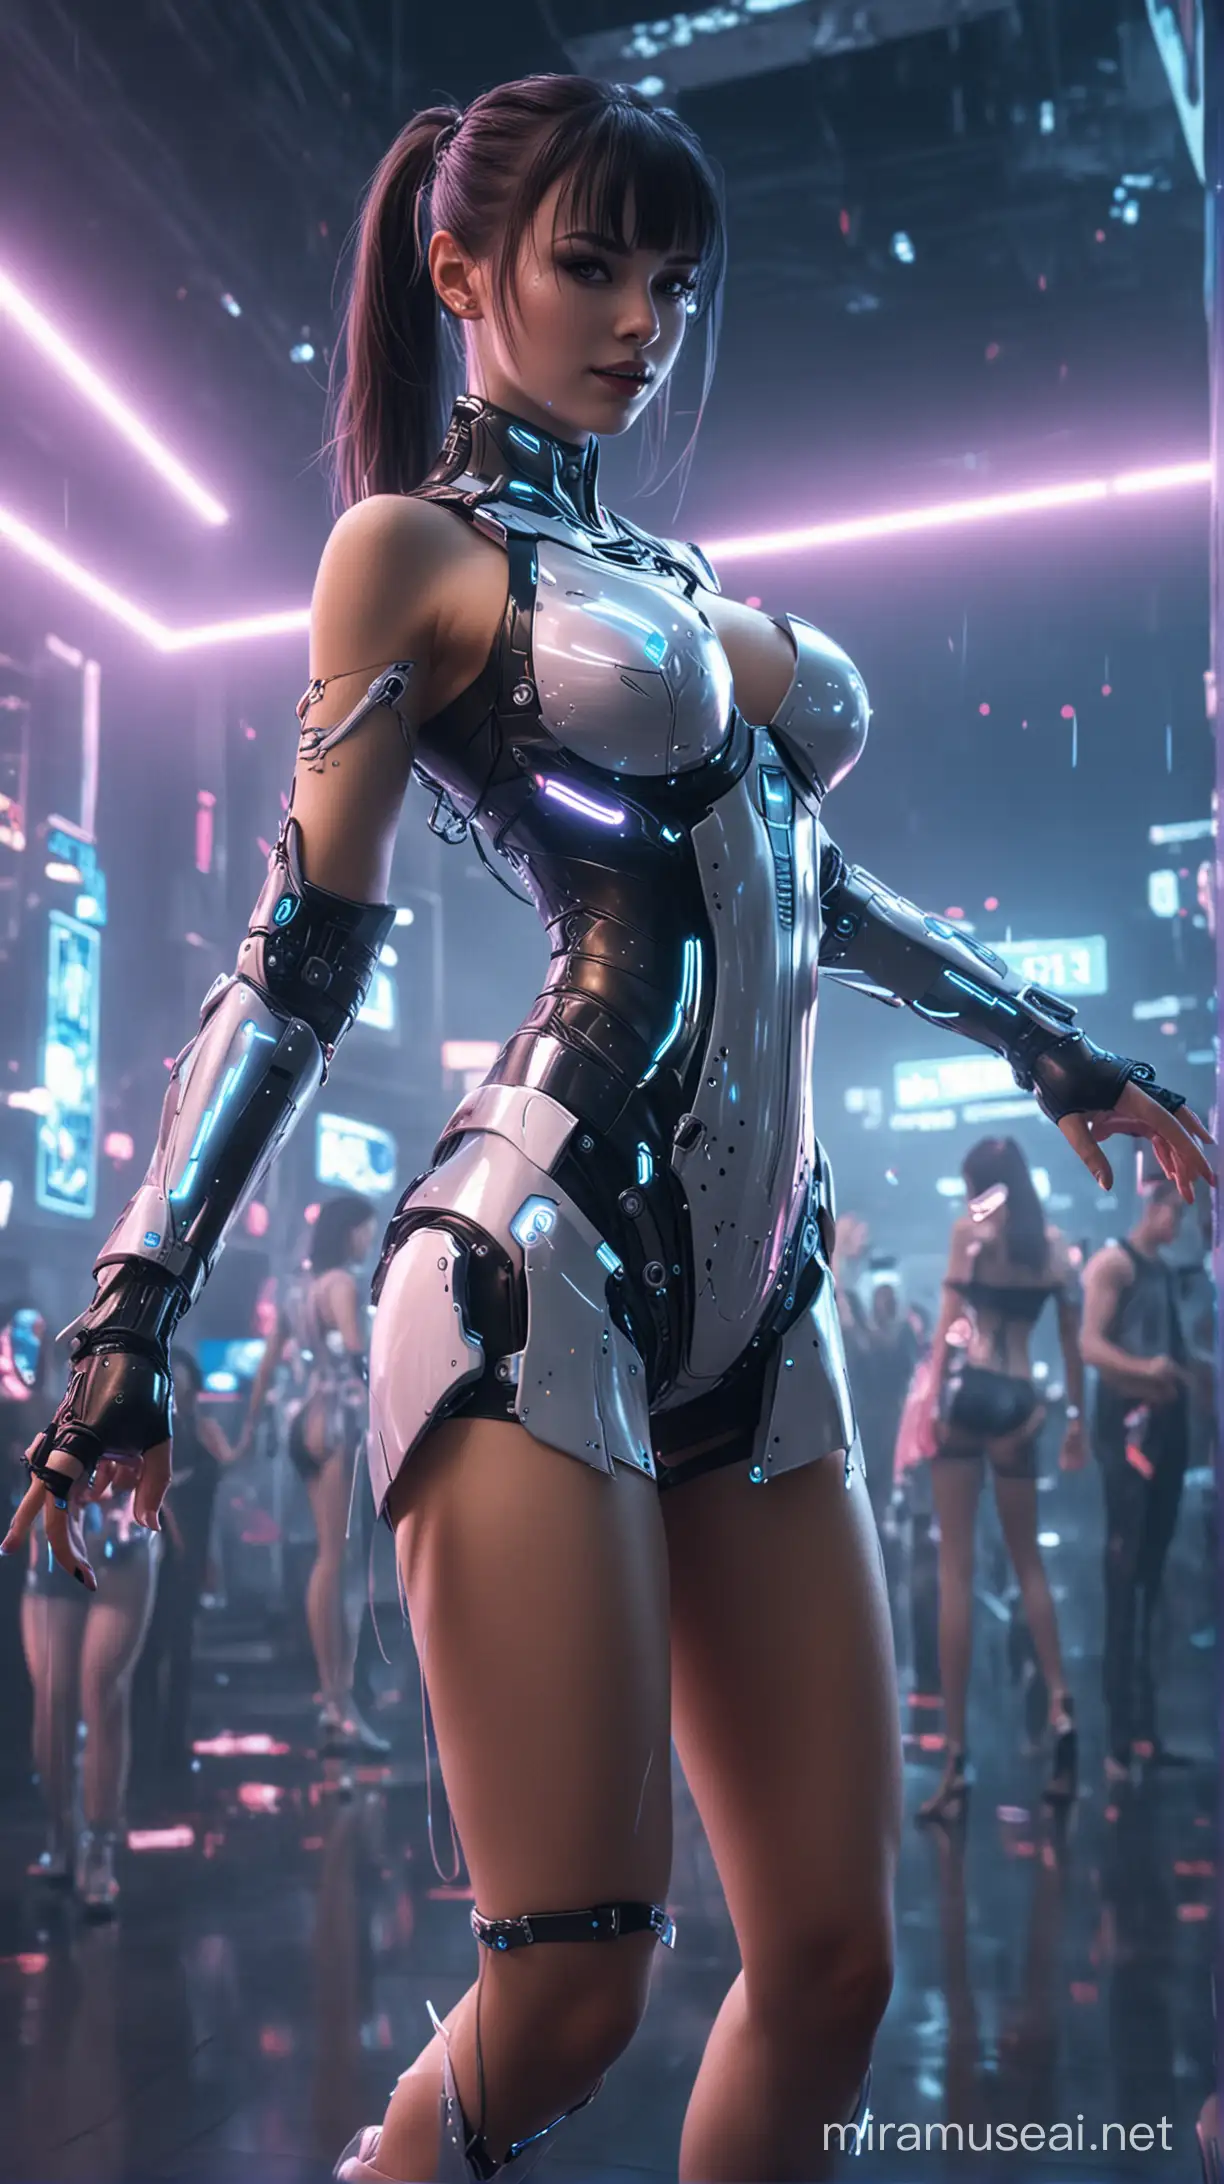 Futuristic Cyber City Night Energetic Cyber Girl Dancing at Night Club